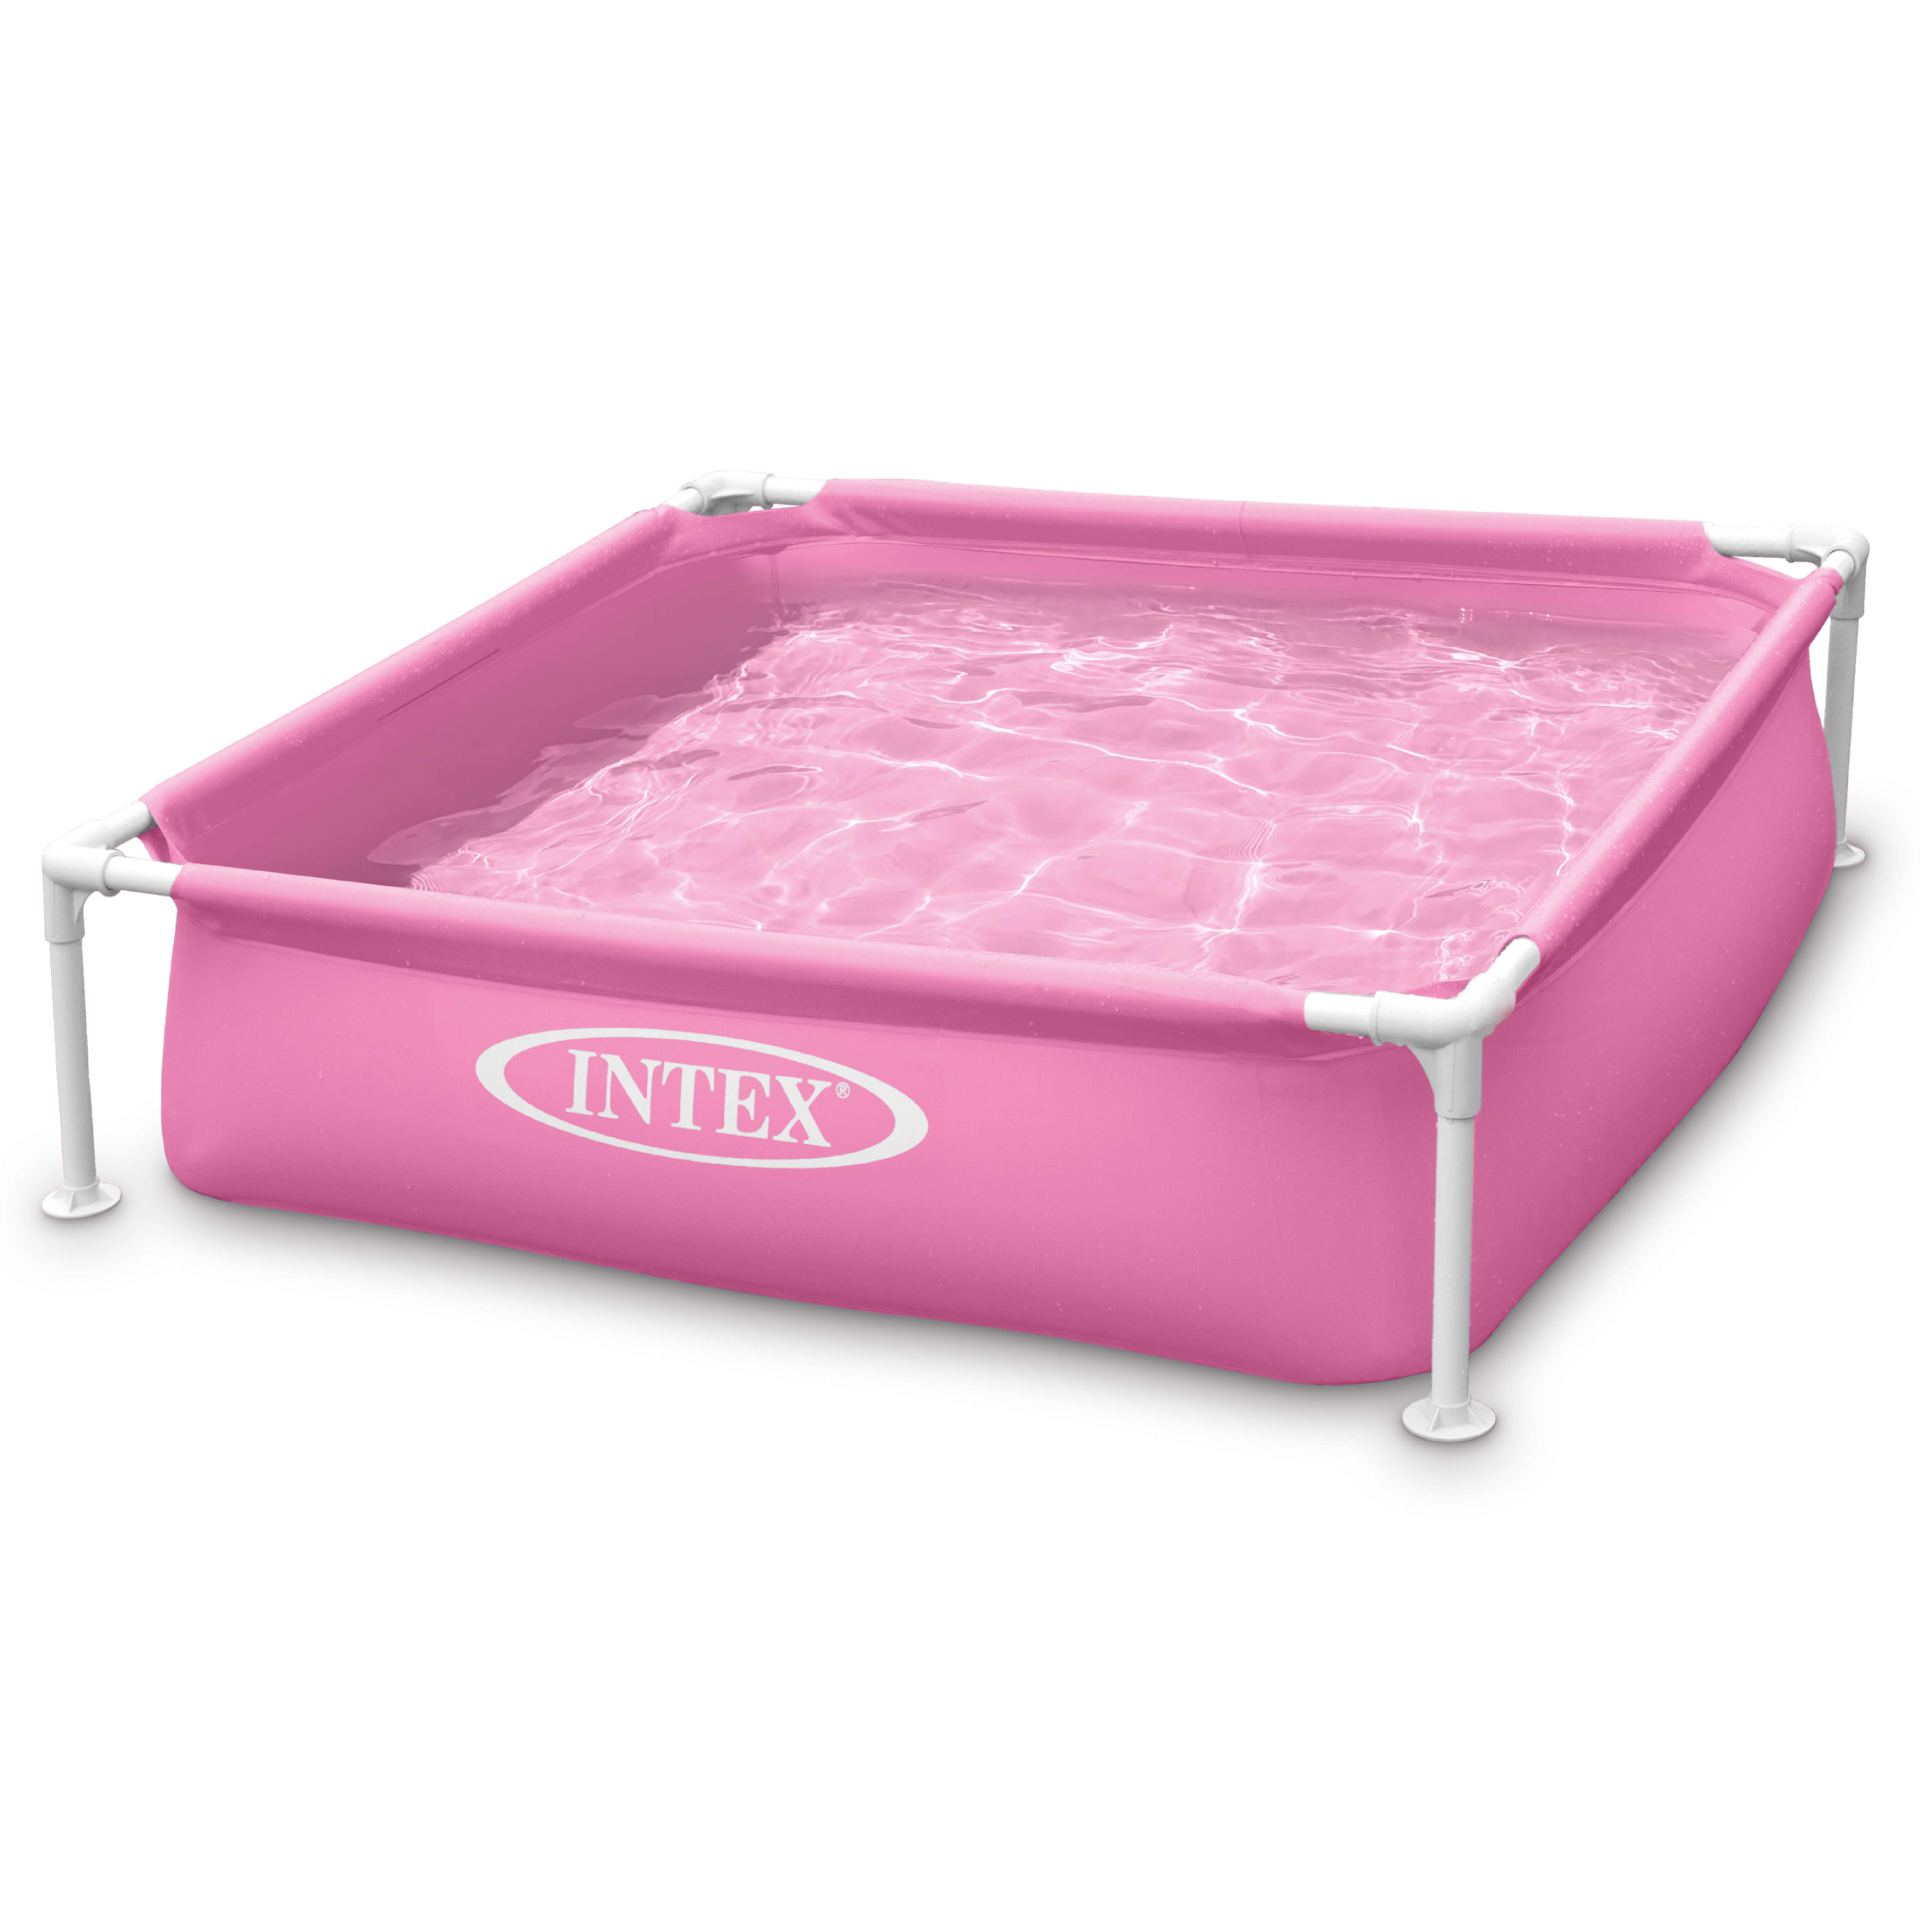 Intex mini frame pool - Roze